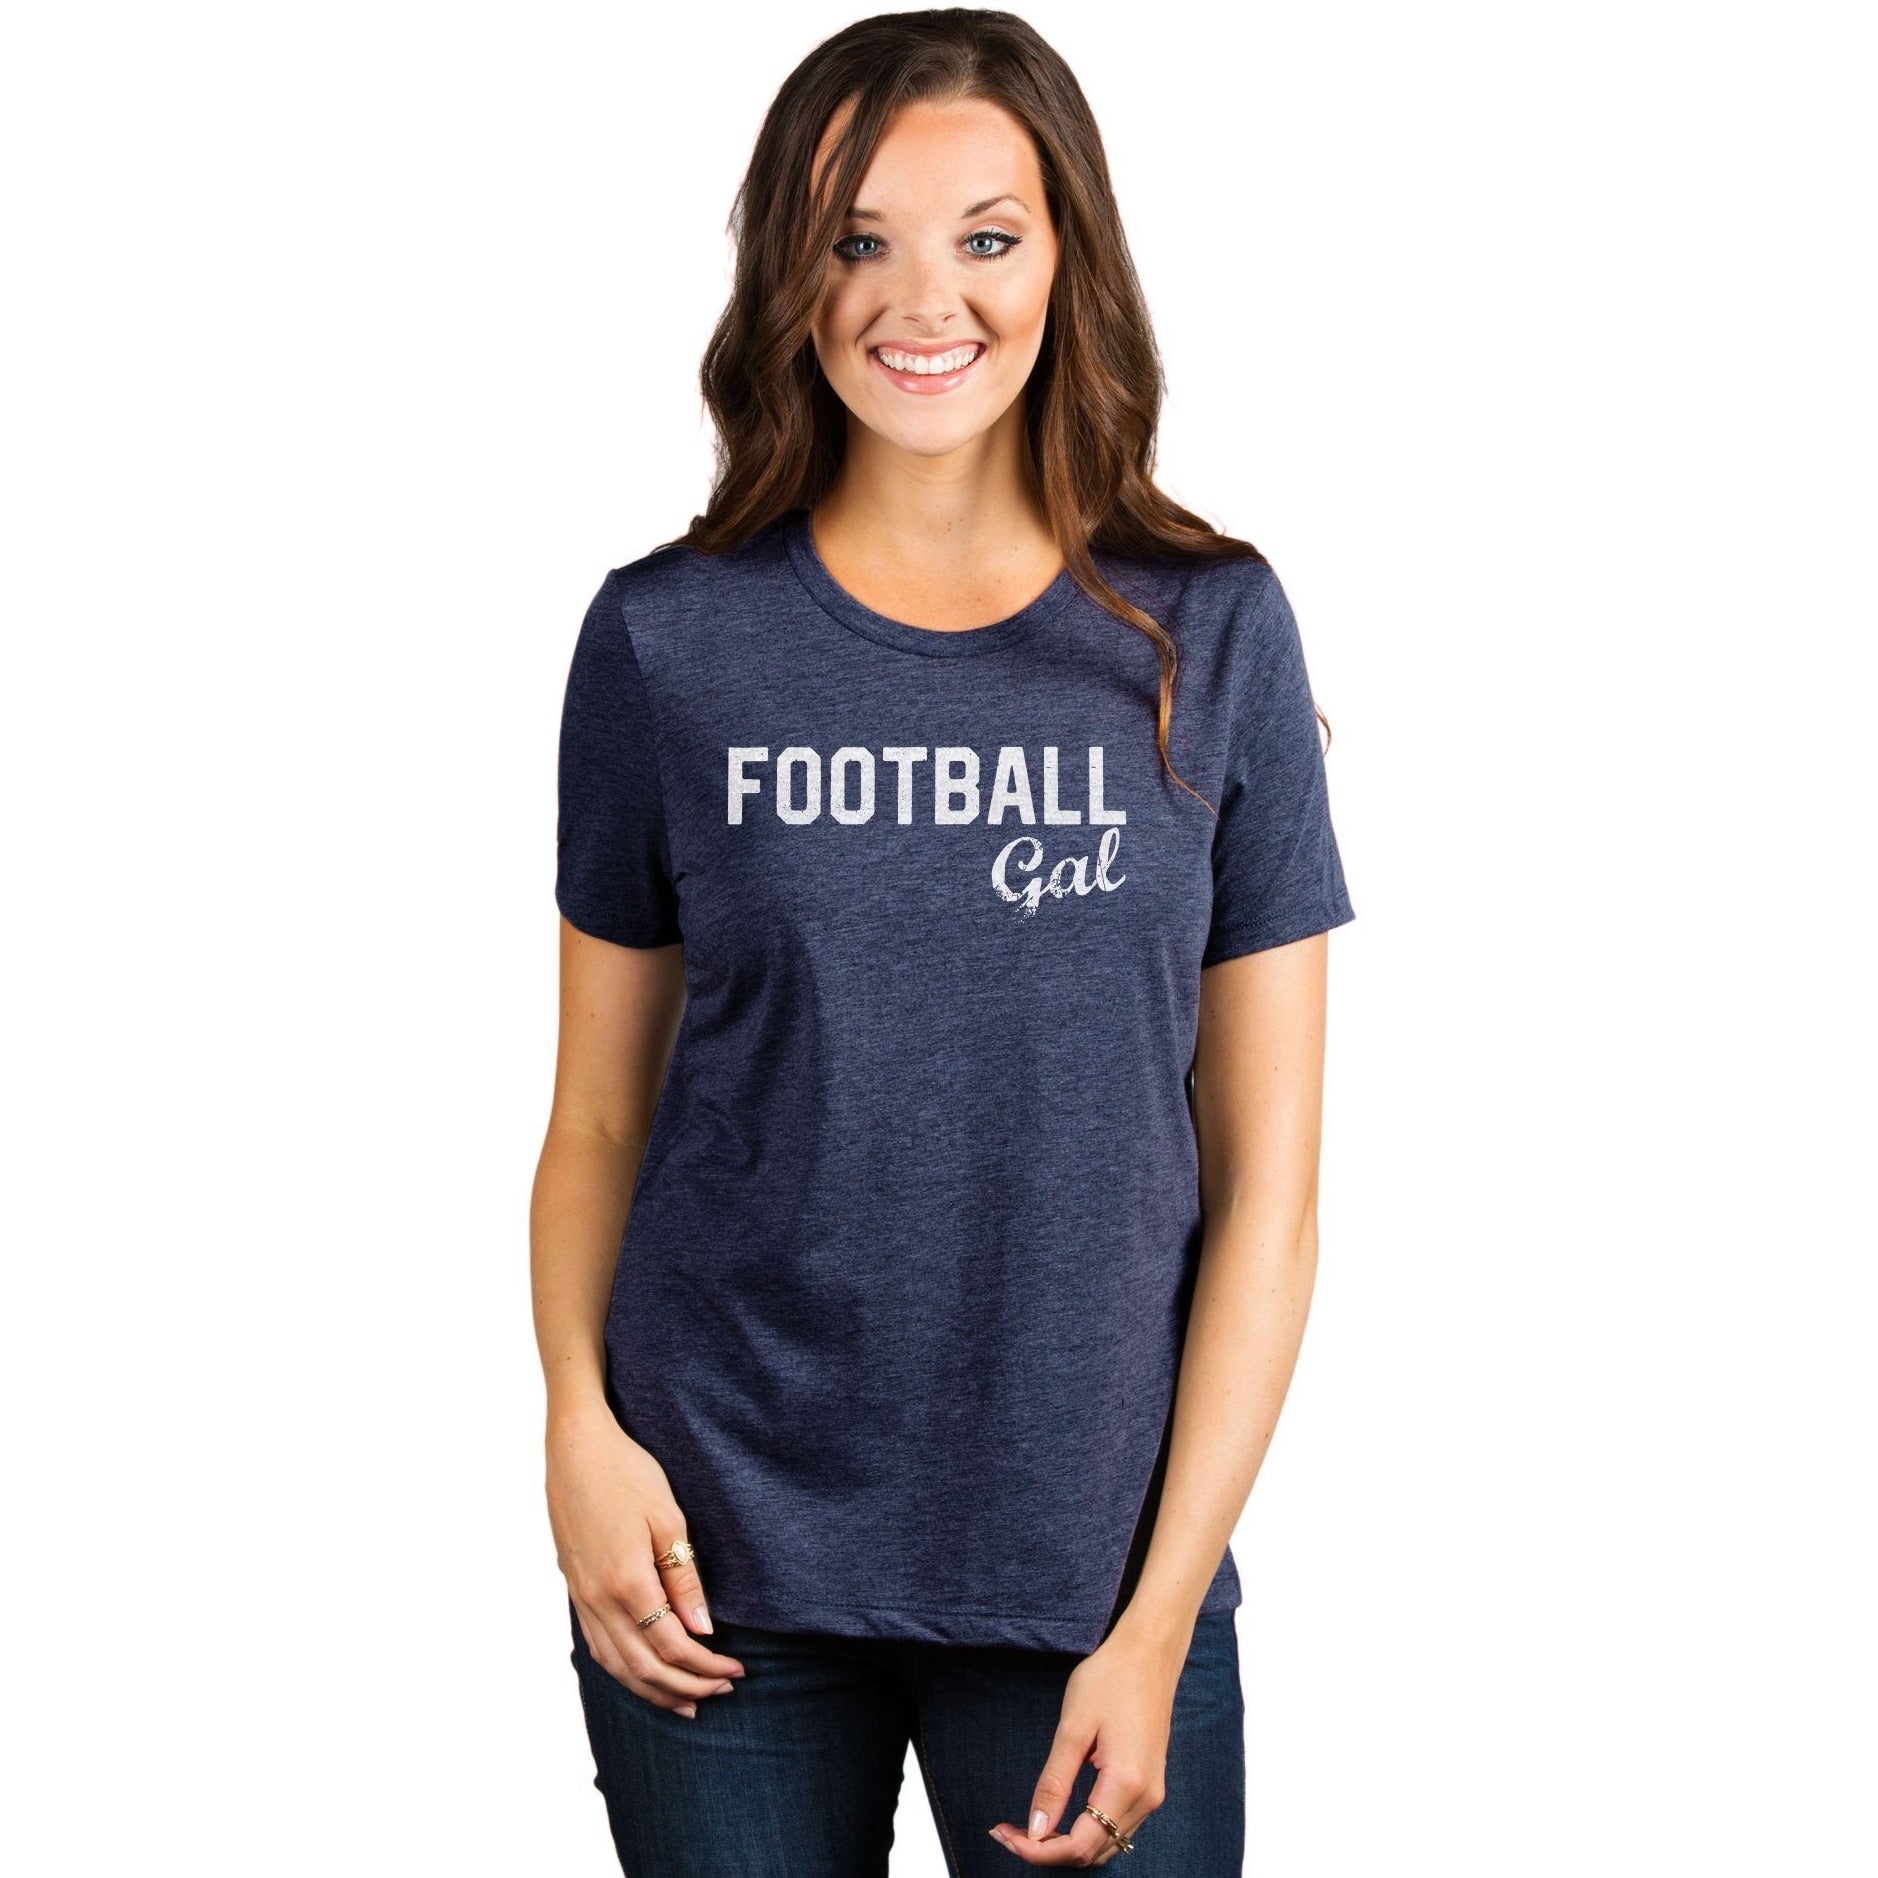 Football Gal Women's Relaxed Crewneck T-Shirt Top Tee Heather Navy Model
